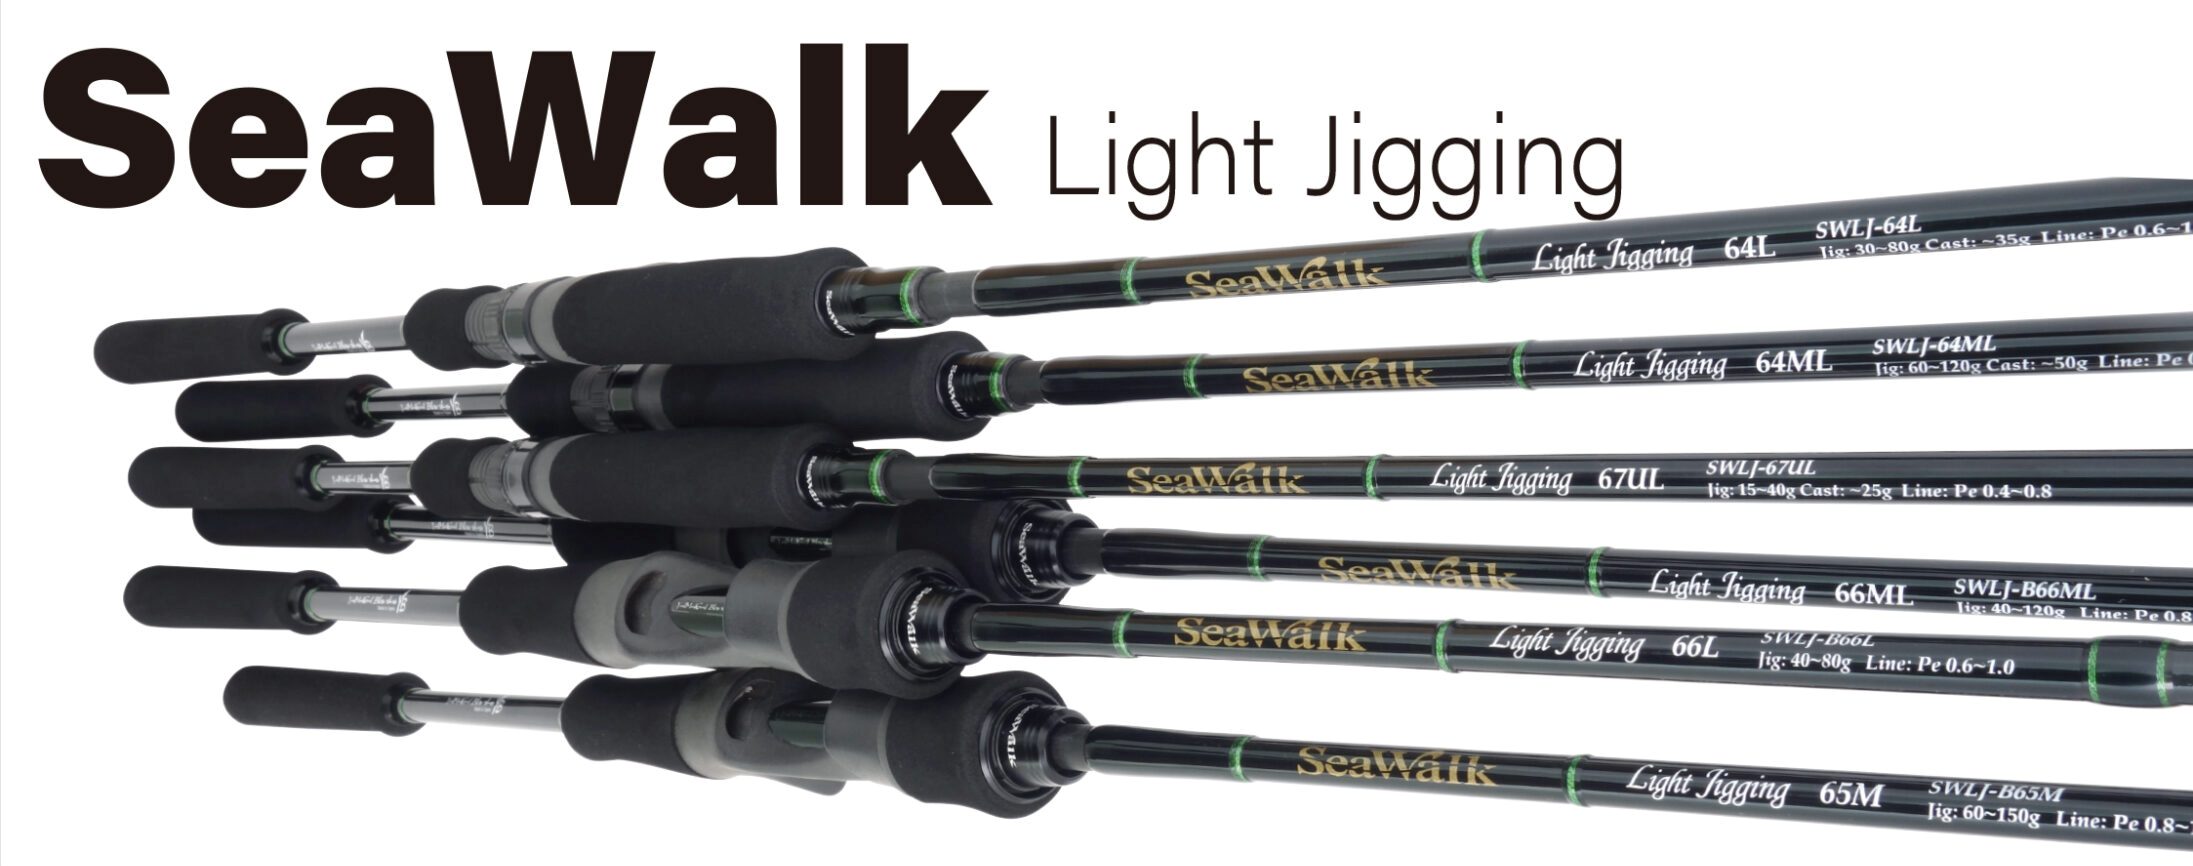 YAMAGA BLANKS 22 SeaWalk Light Jigging 64L Rods buy at Fishingshop